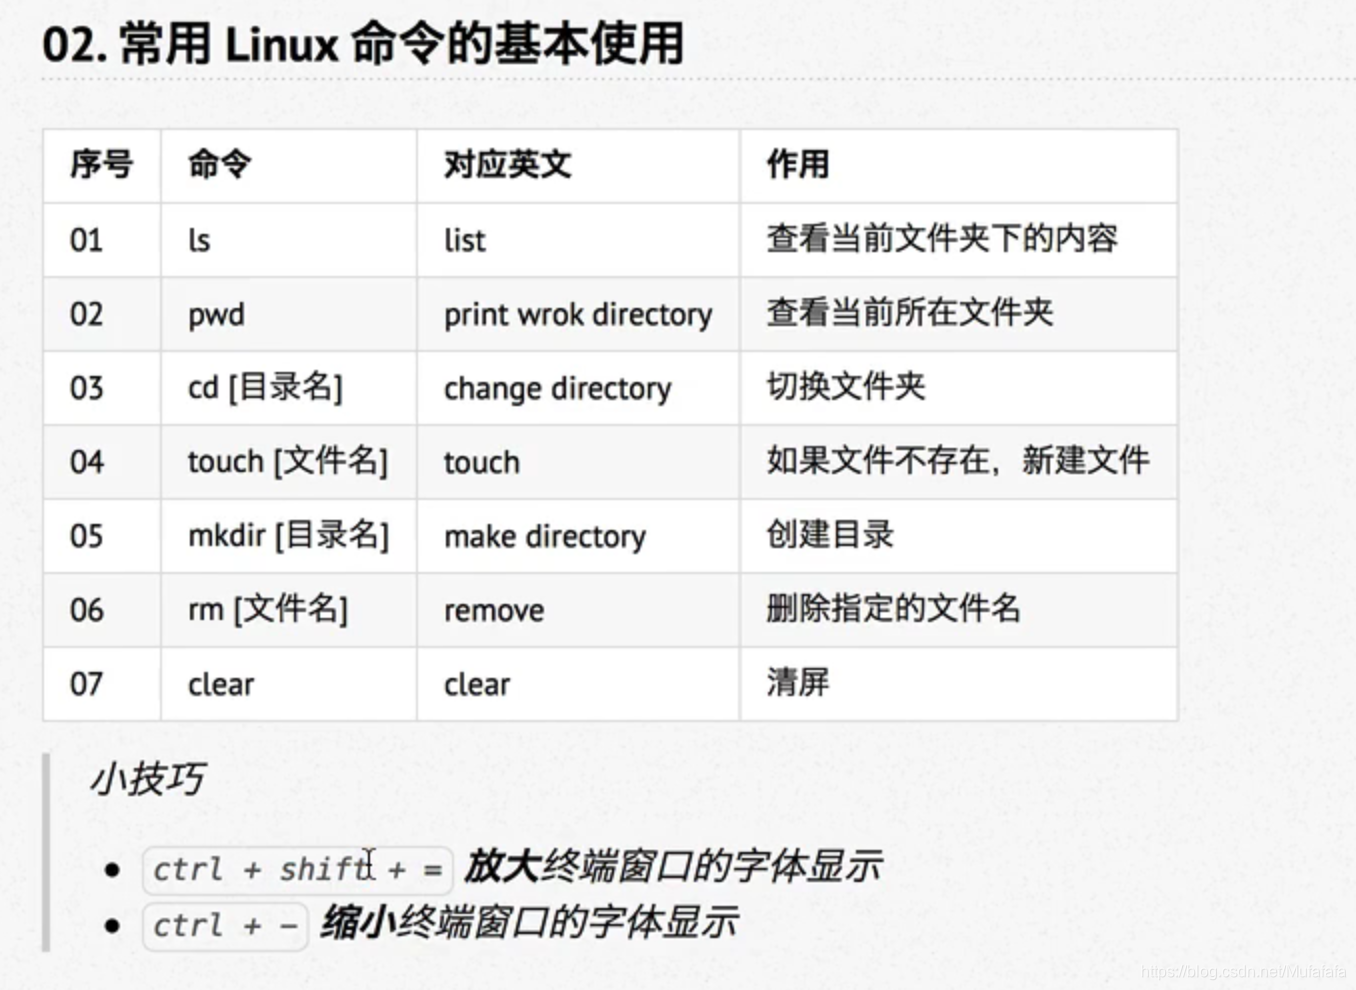 Linux的命令基本格式